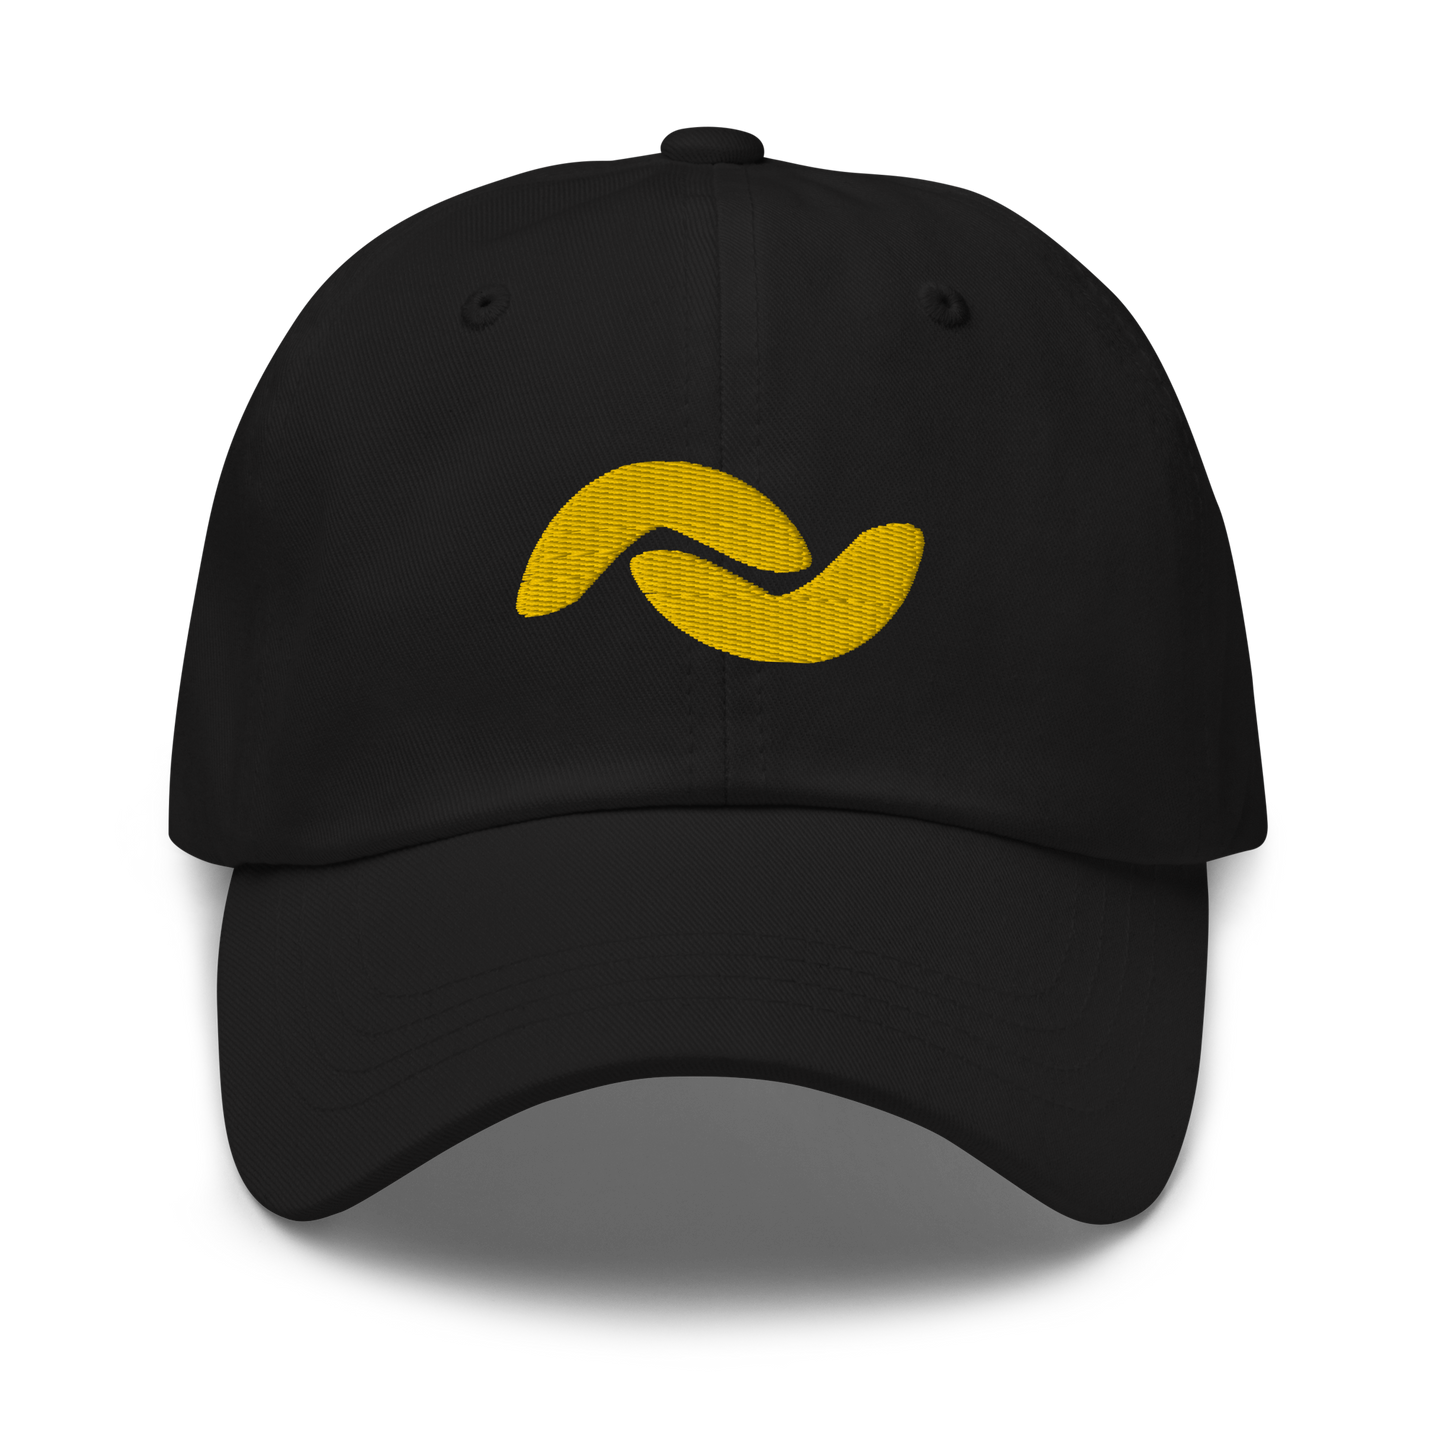 Banano Submark Hat